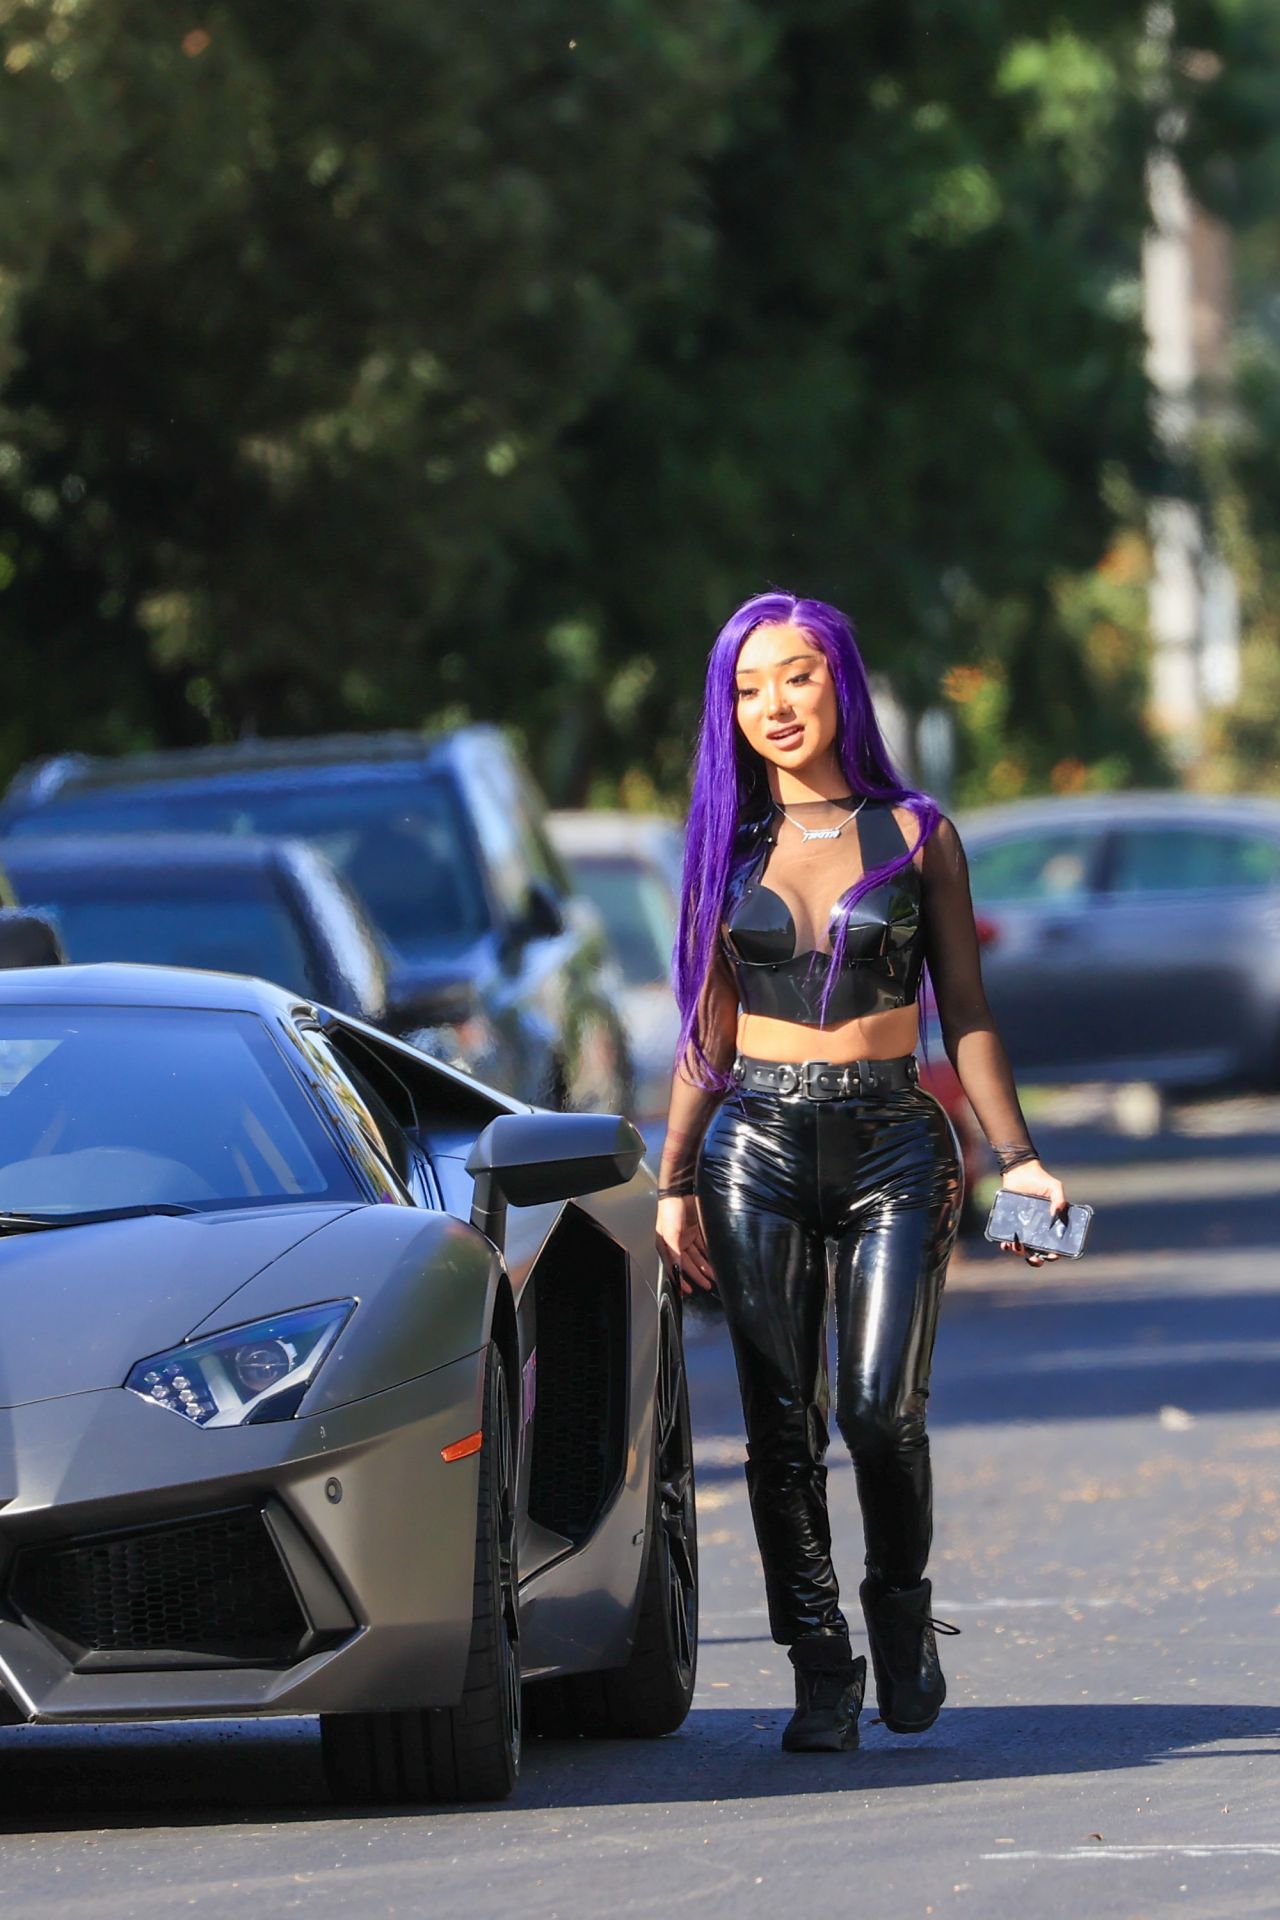 Nikita Dragun in a Pvc Outfit - Photoshoot With Her Lamborghini in